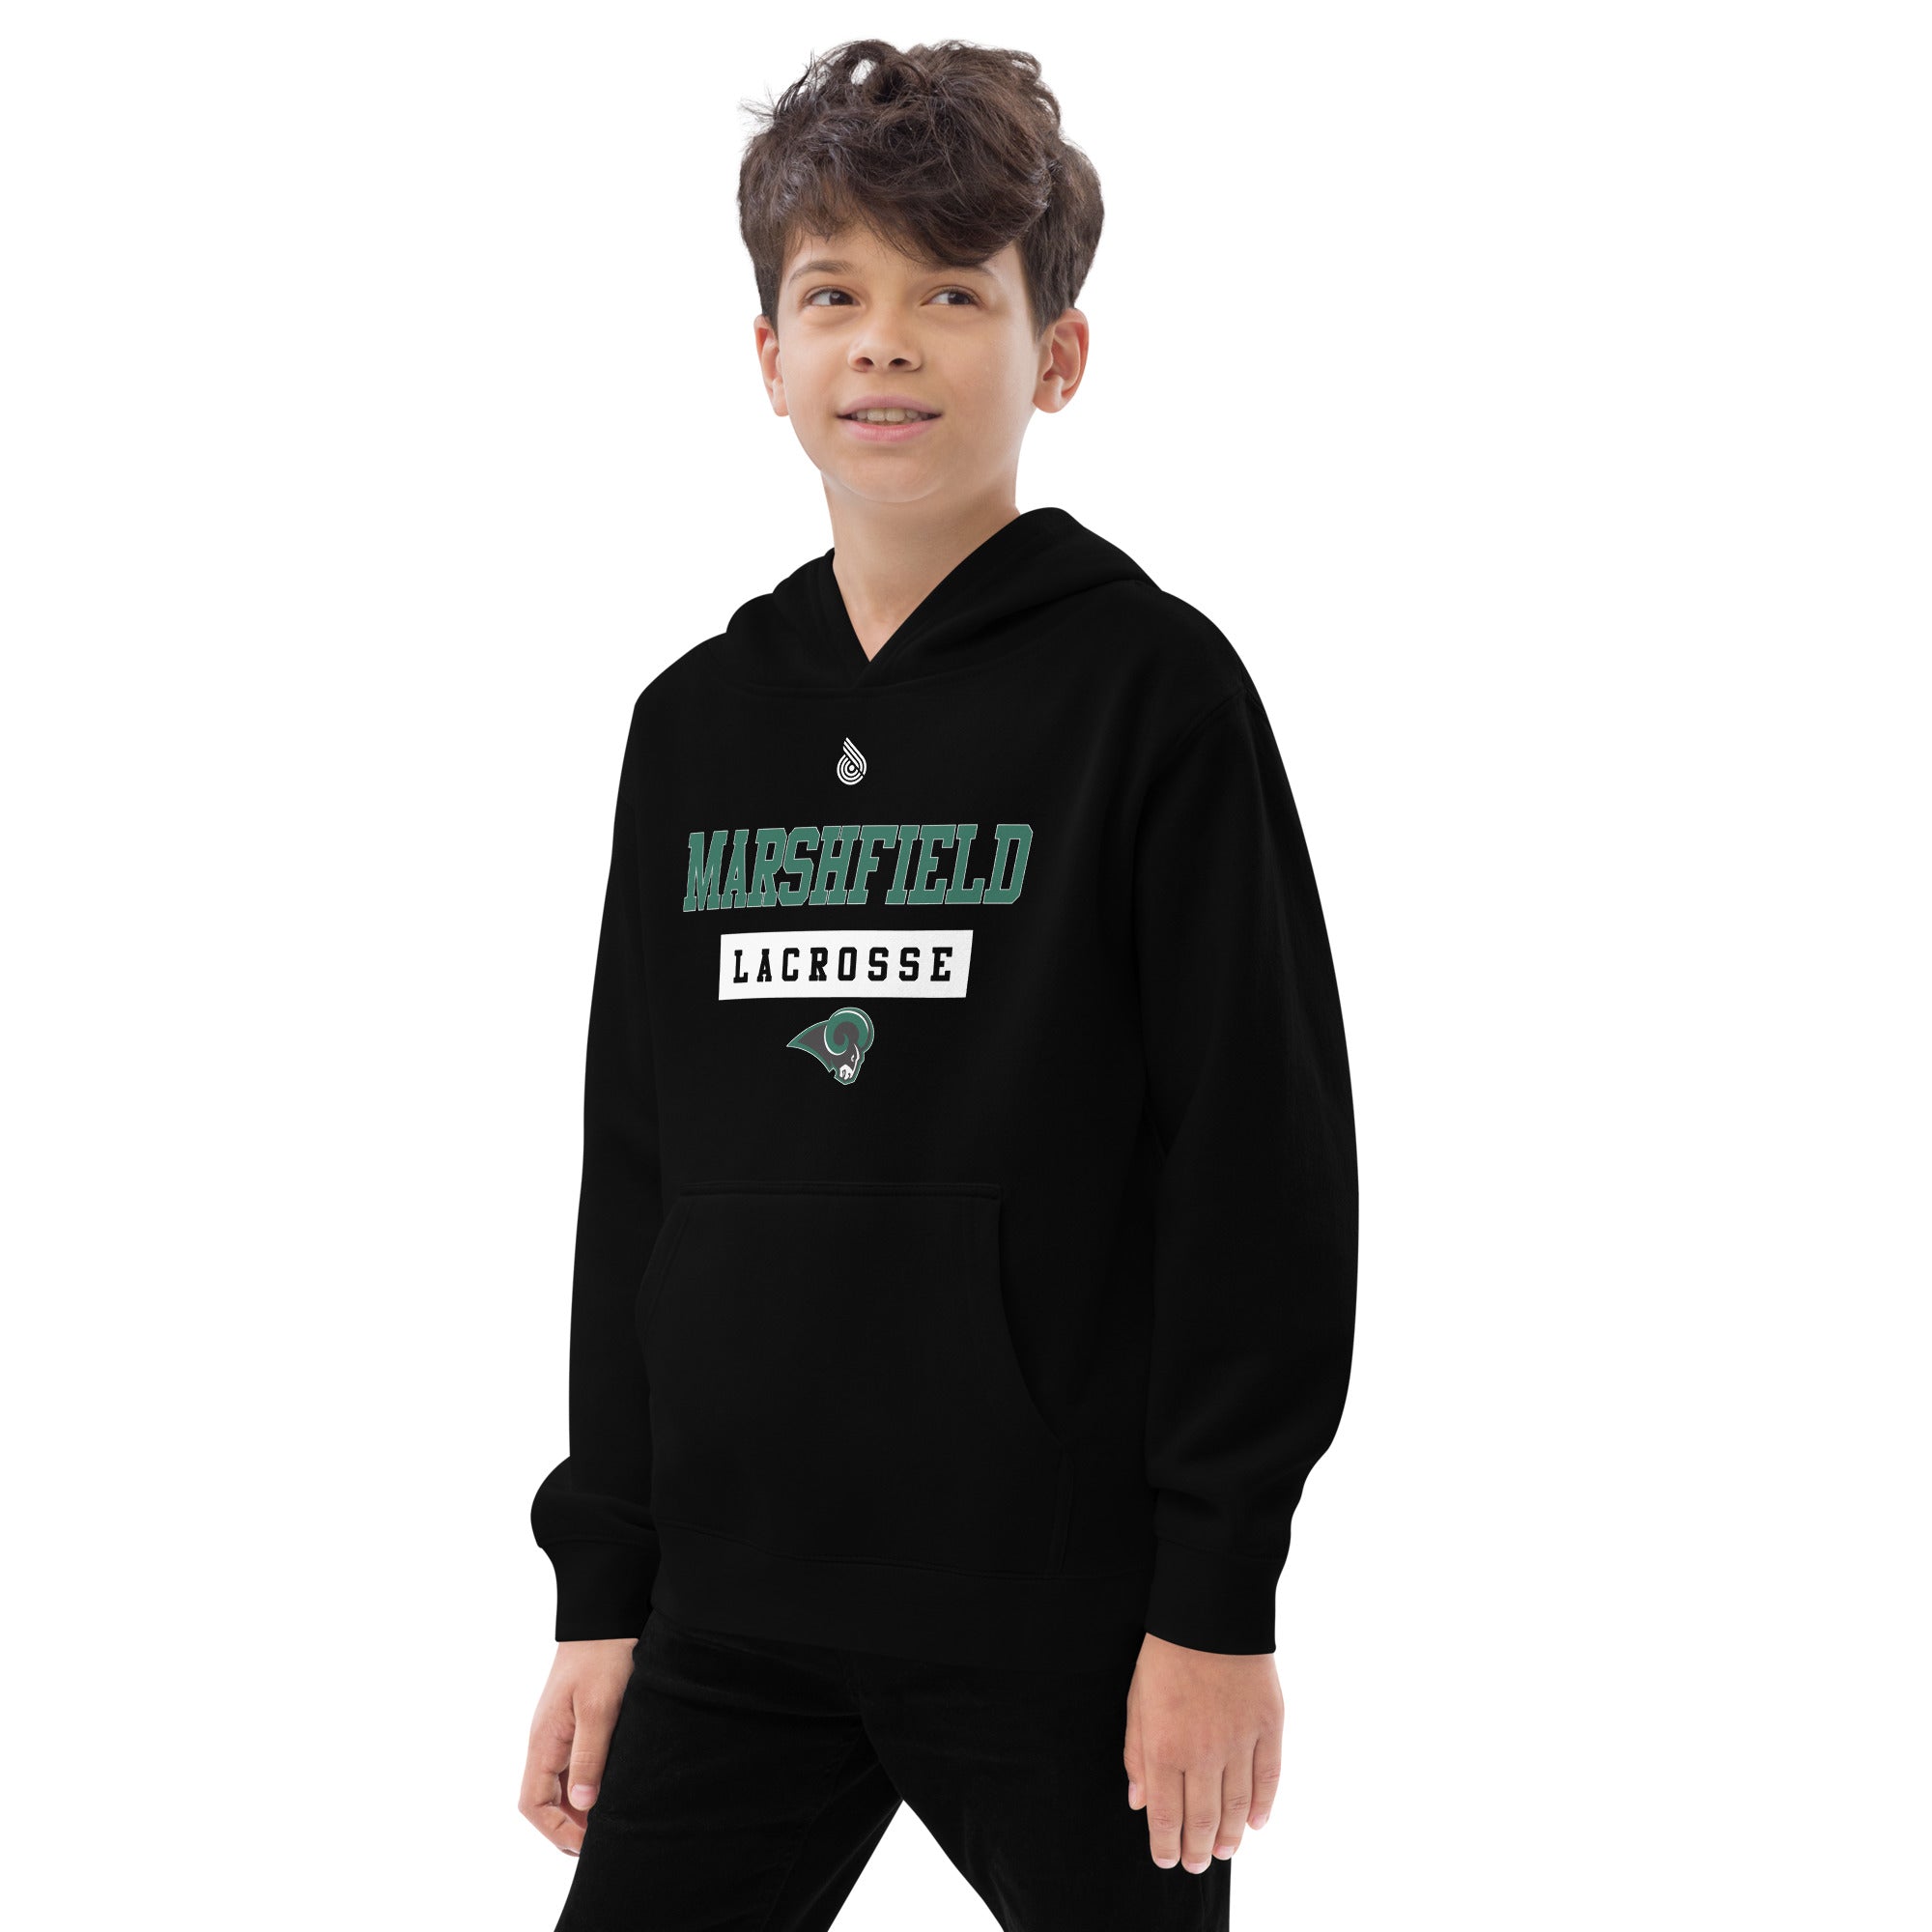 Marshfield Youth fleece hoodie